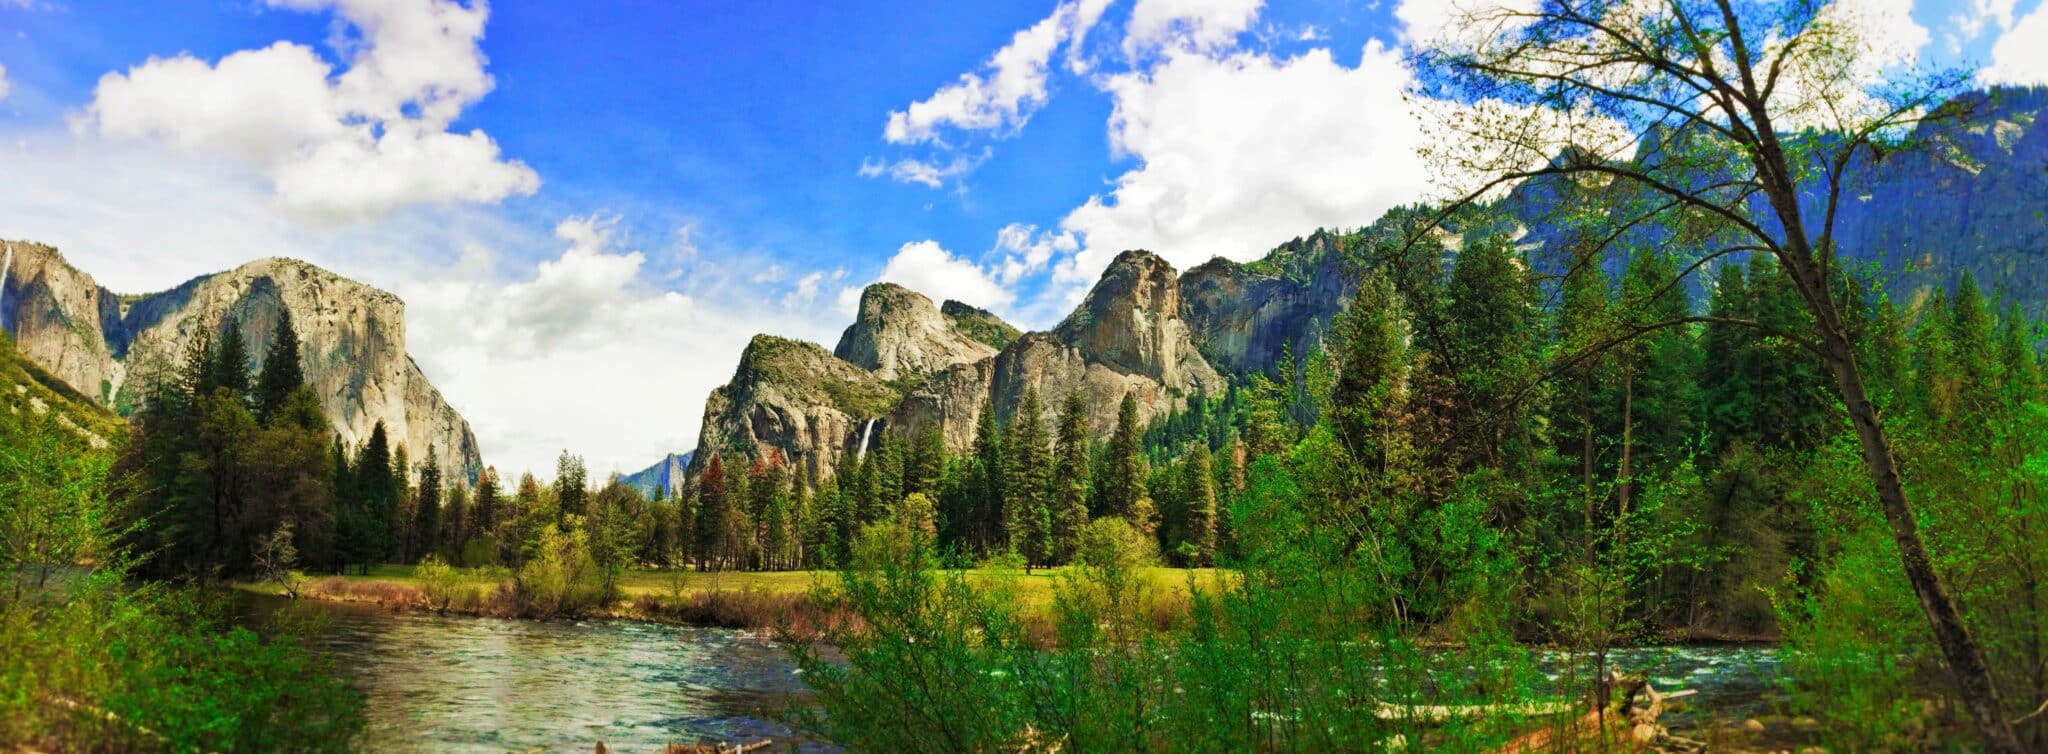 Yosemite National Park family travel guide